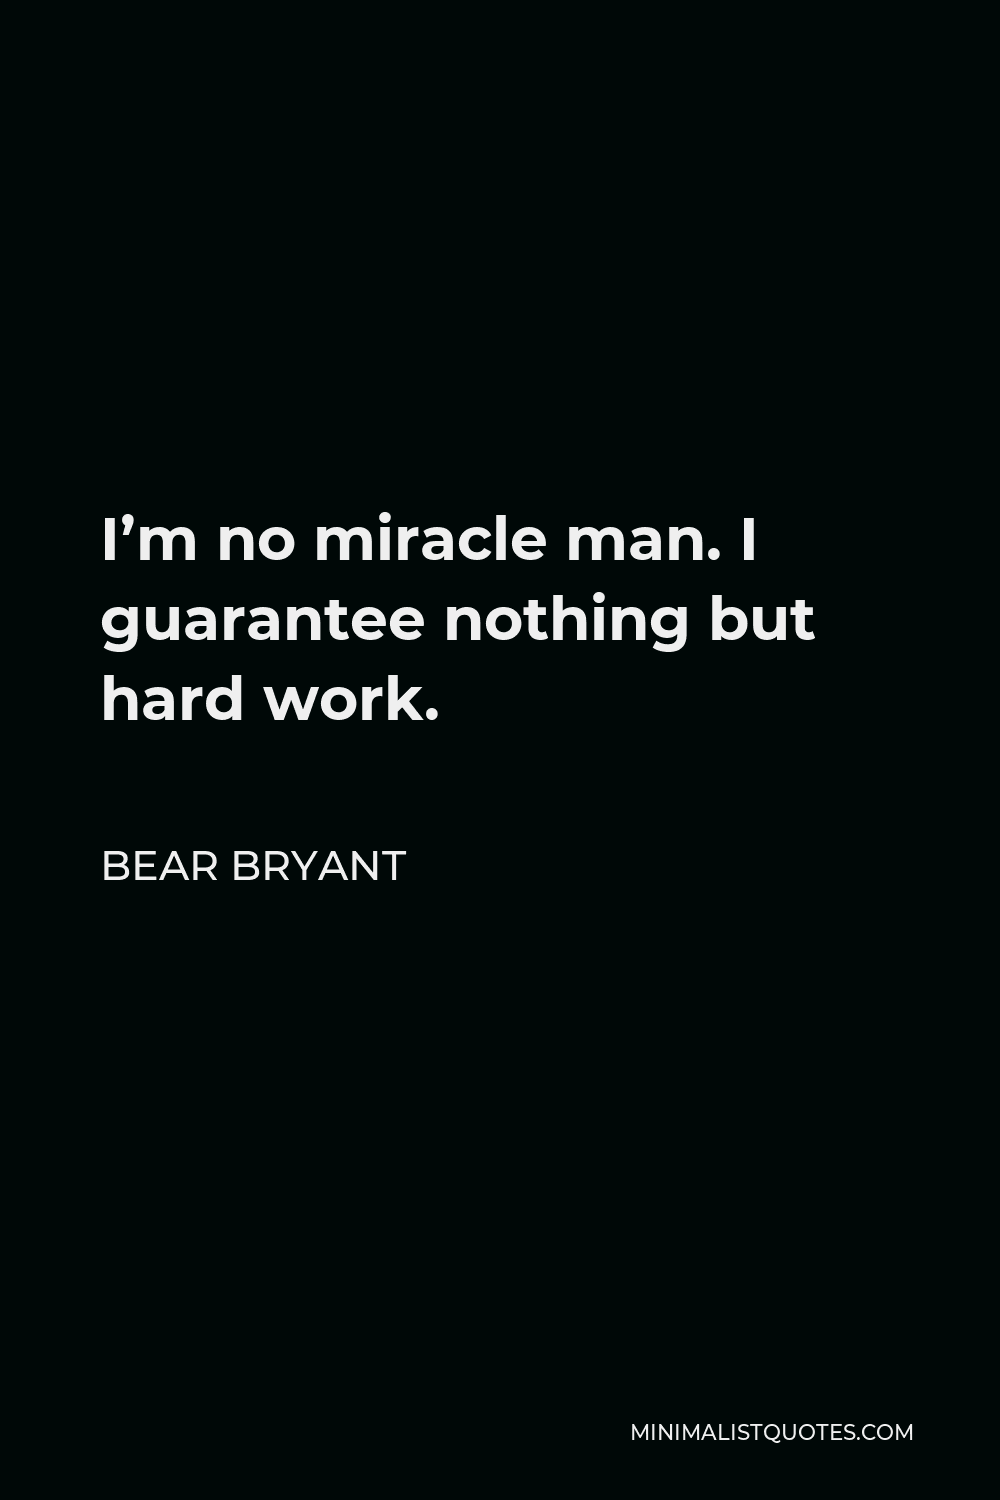 Bear Bryant Quote - I’m no miracle man. I guarantee nothing but hard work.